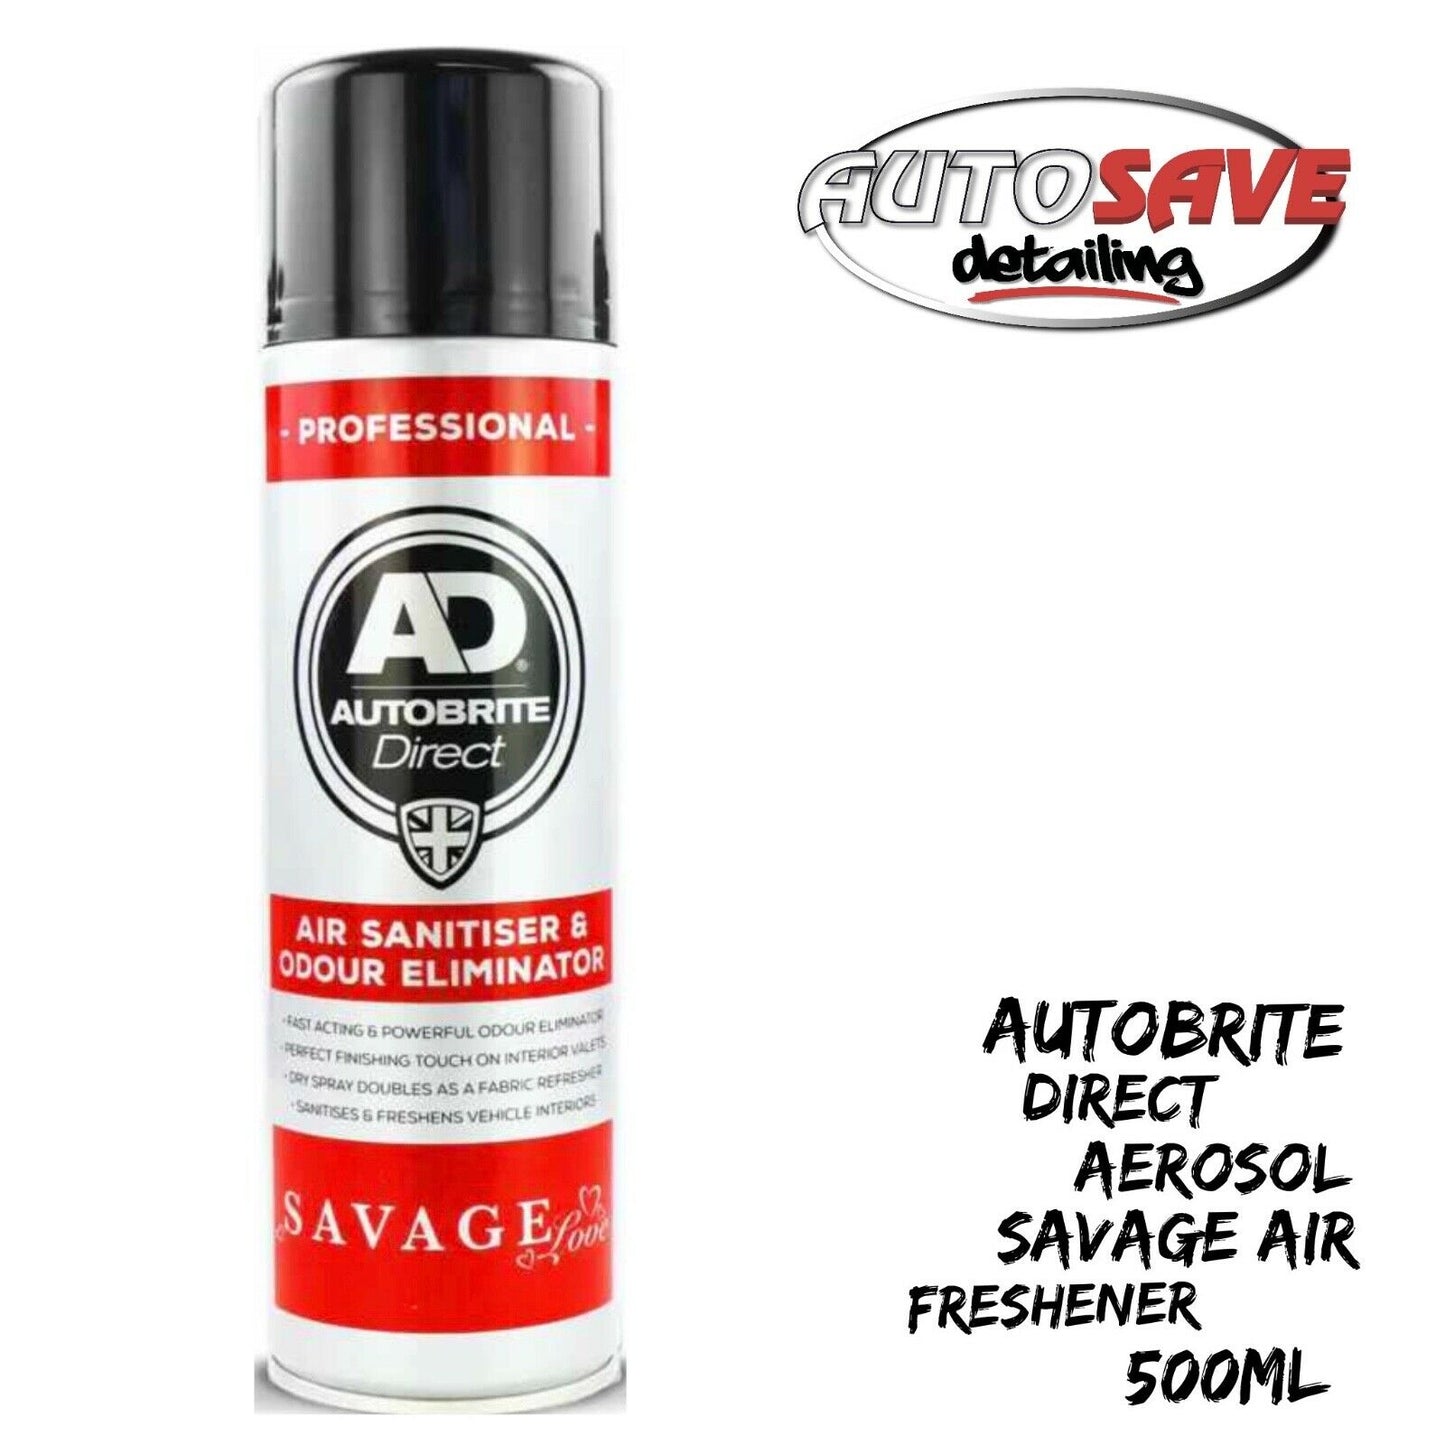 Autobrite Direct - Professional Aerosol Air Freshener x 1 Single Can Savage